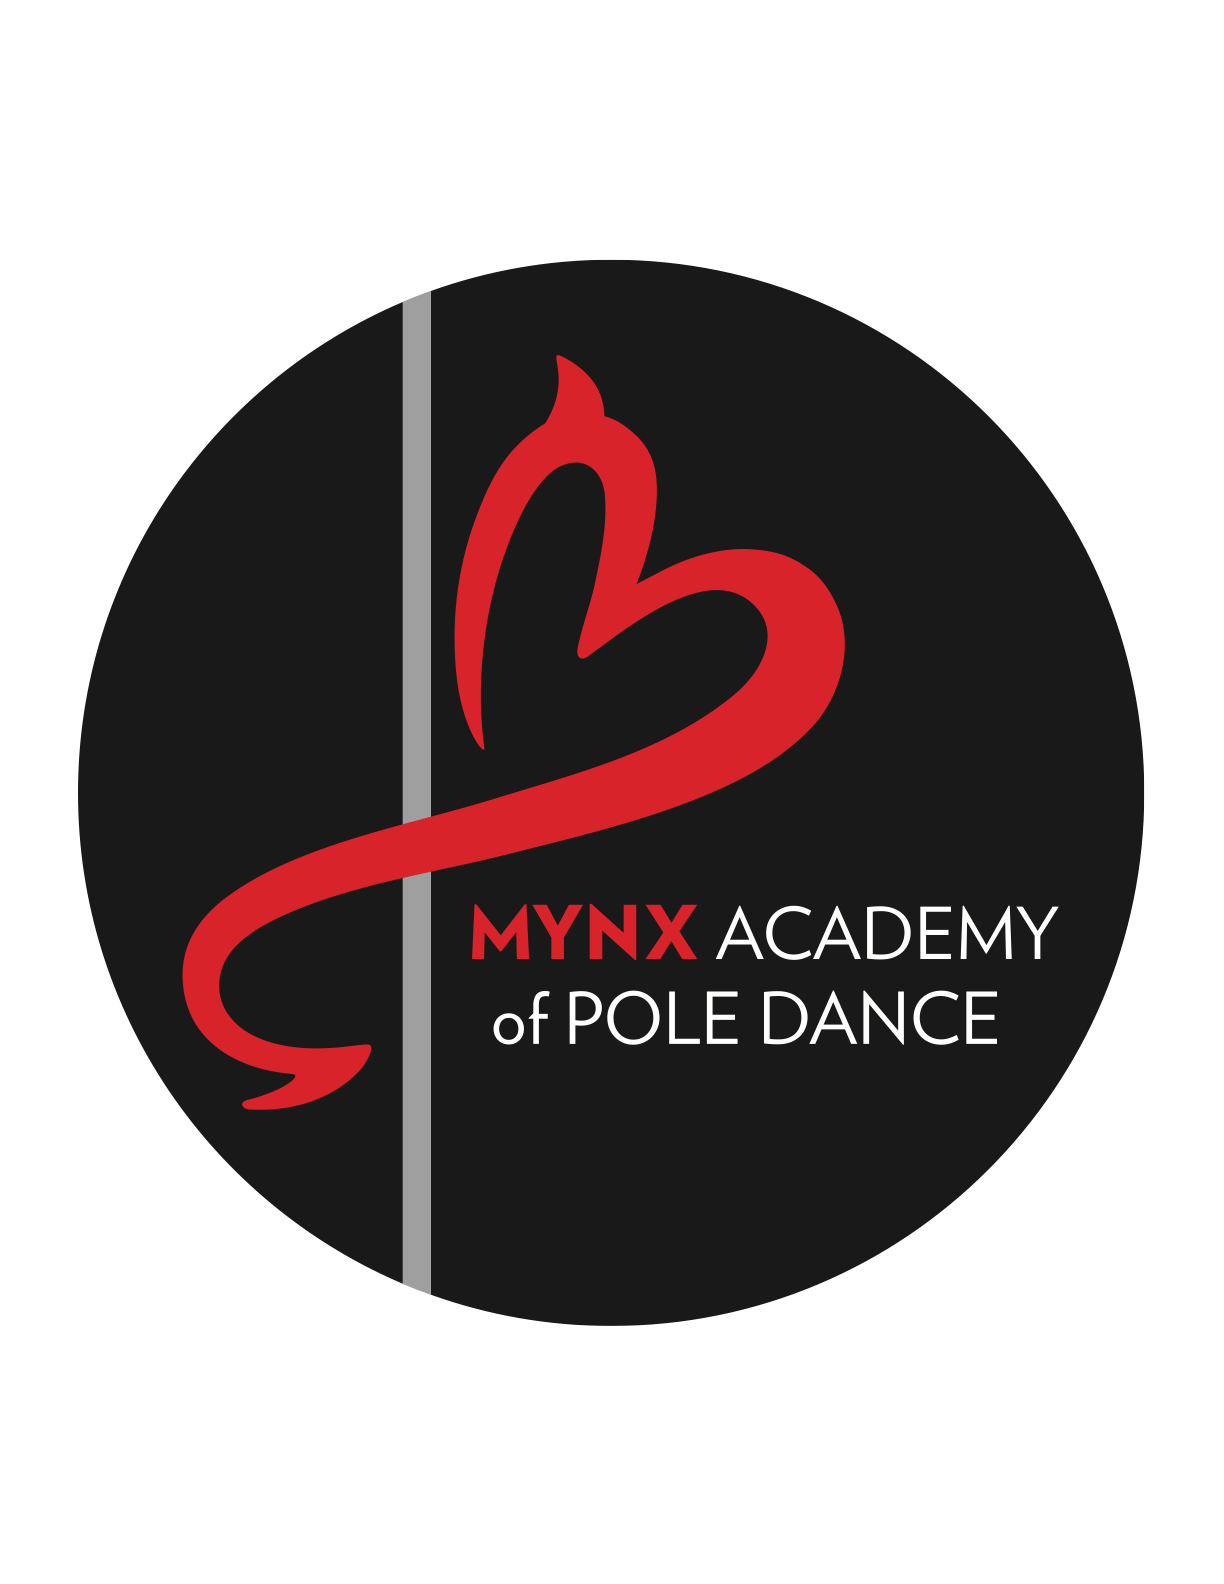 Michelle Mynx Academy of Pole Dance